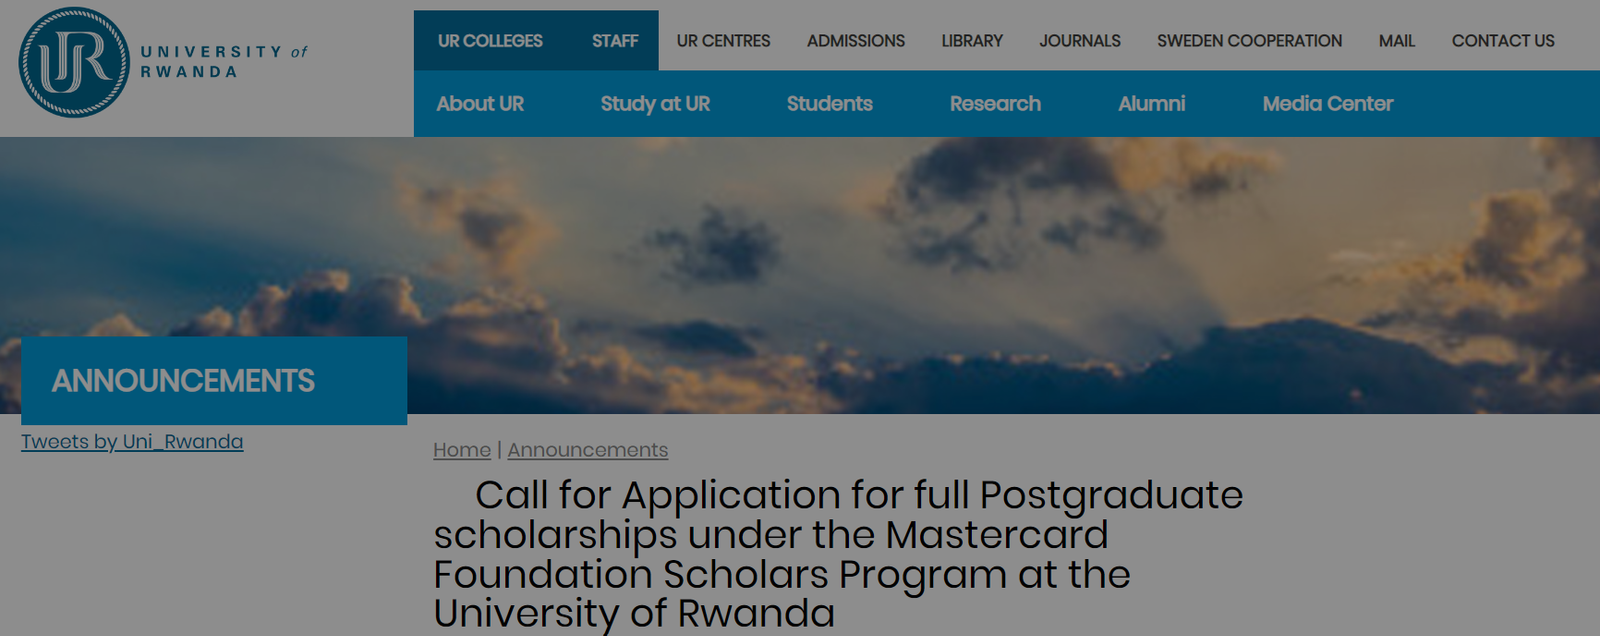 University of Rwanda Mastercard Foundation Scholars Program 2022